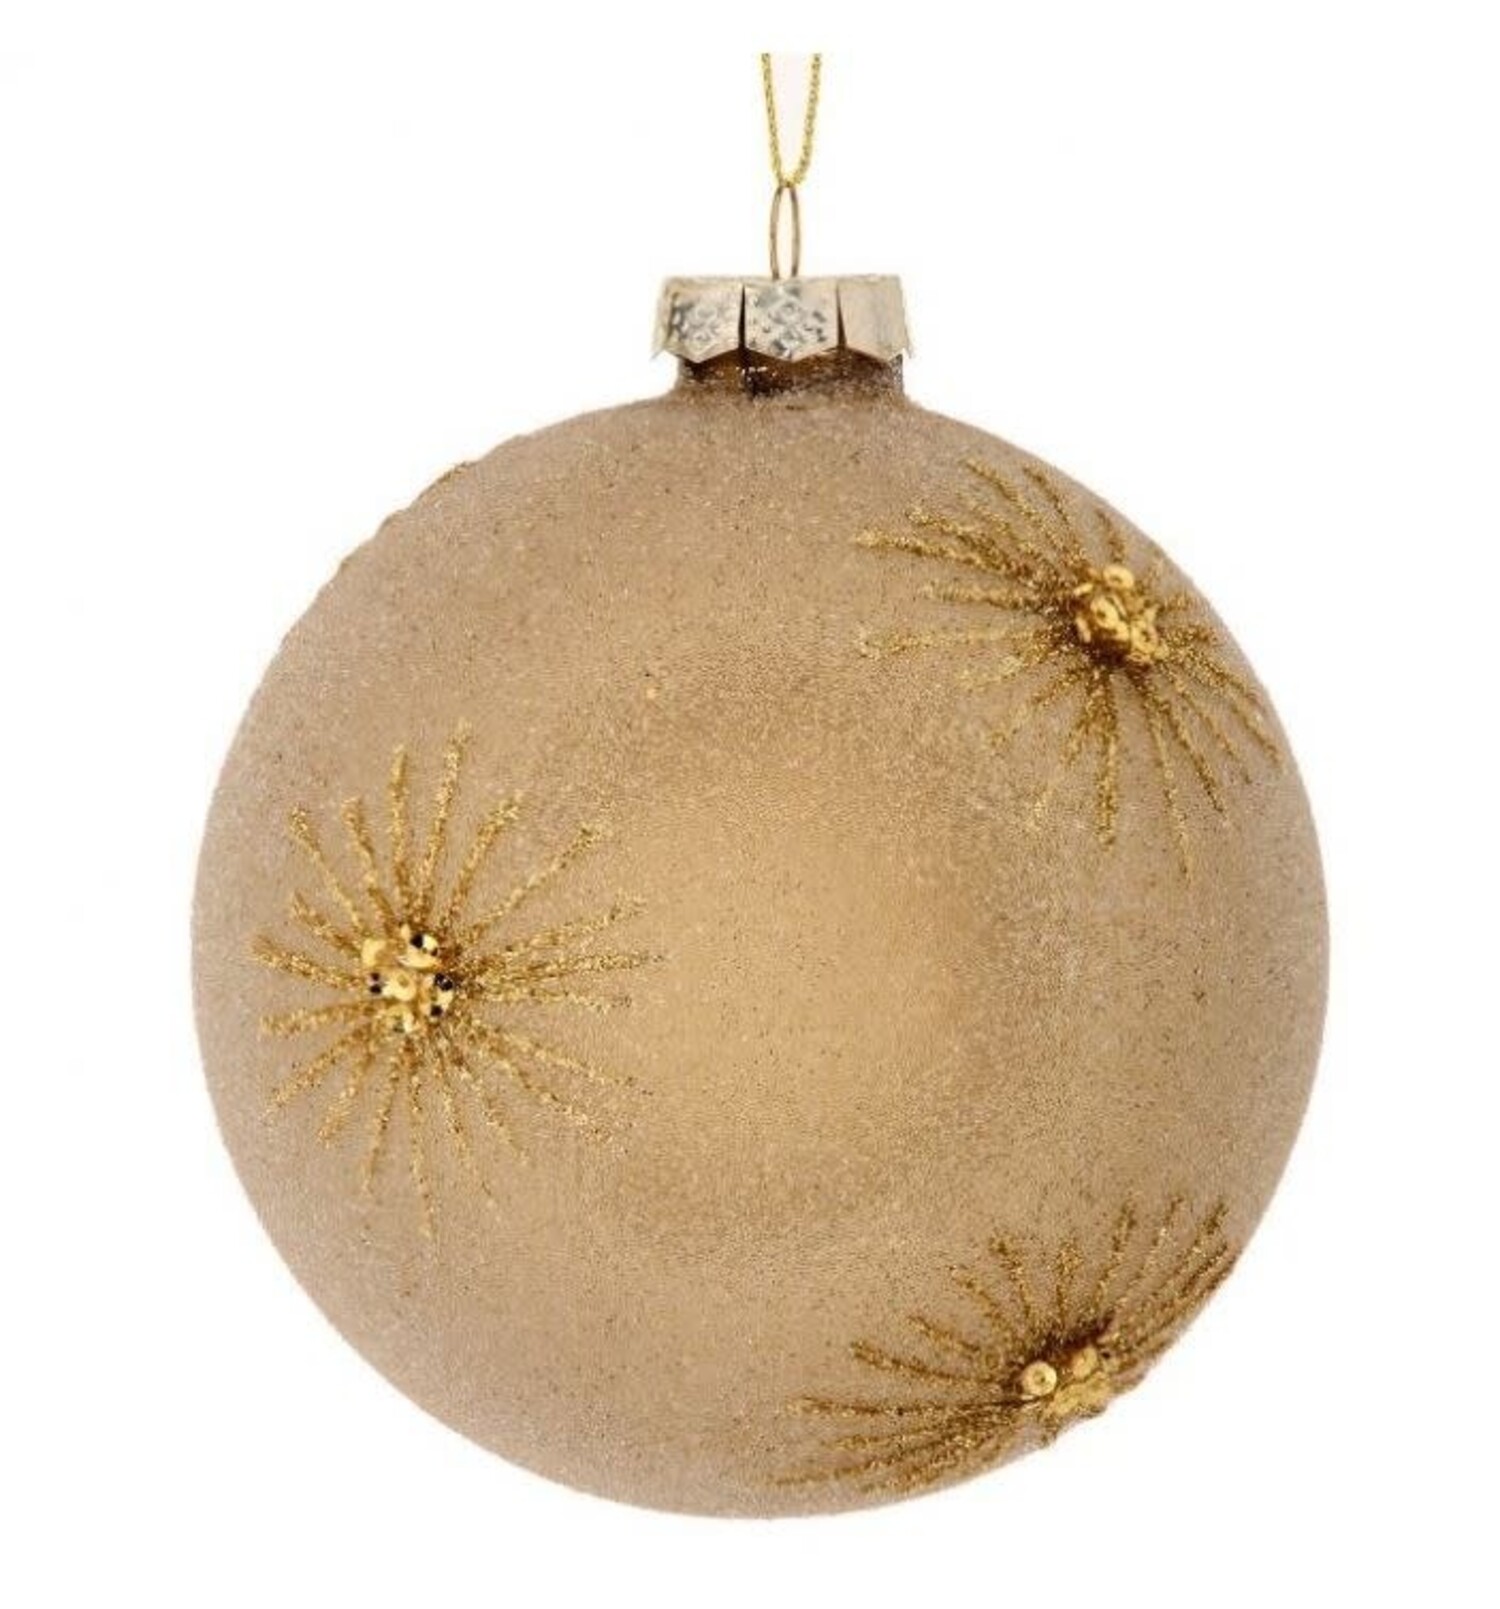 4 Styrofoam Ball Christmas Ornaments - Christmas Ball Ornaments